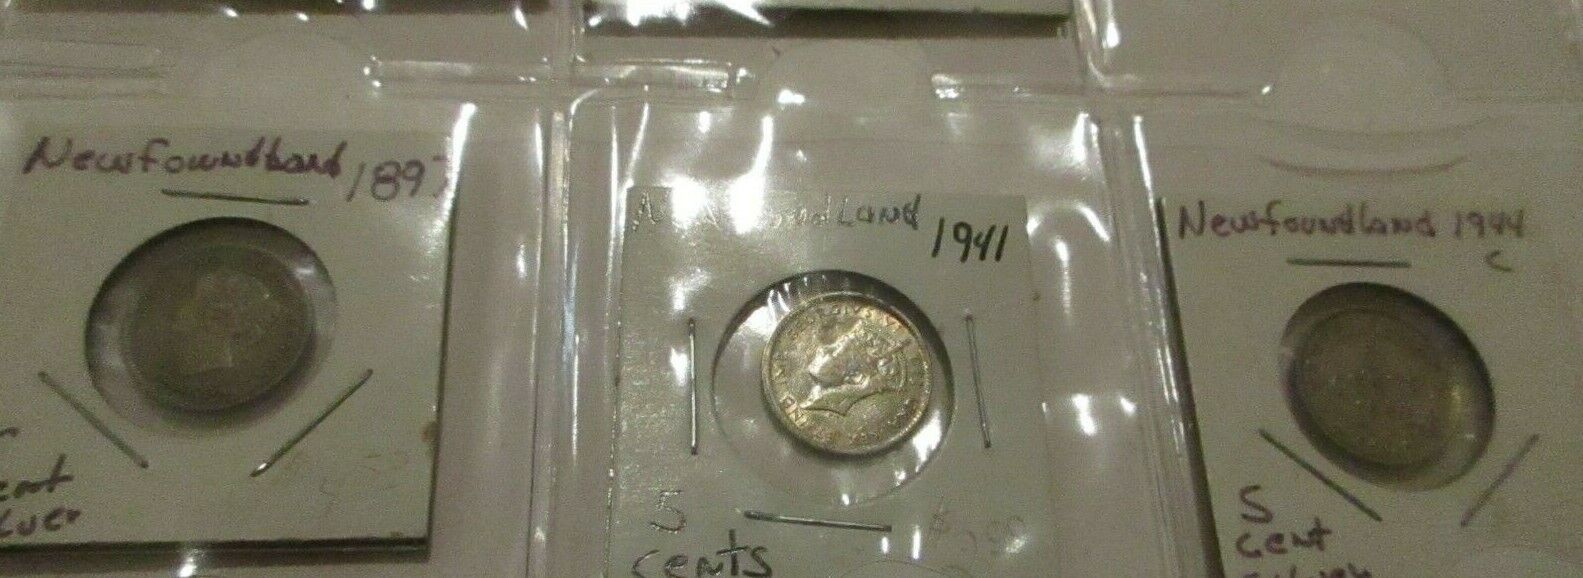 Collection of Newfoundland Coins Без бренда - фотография #3